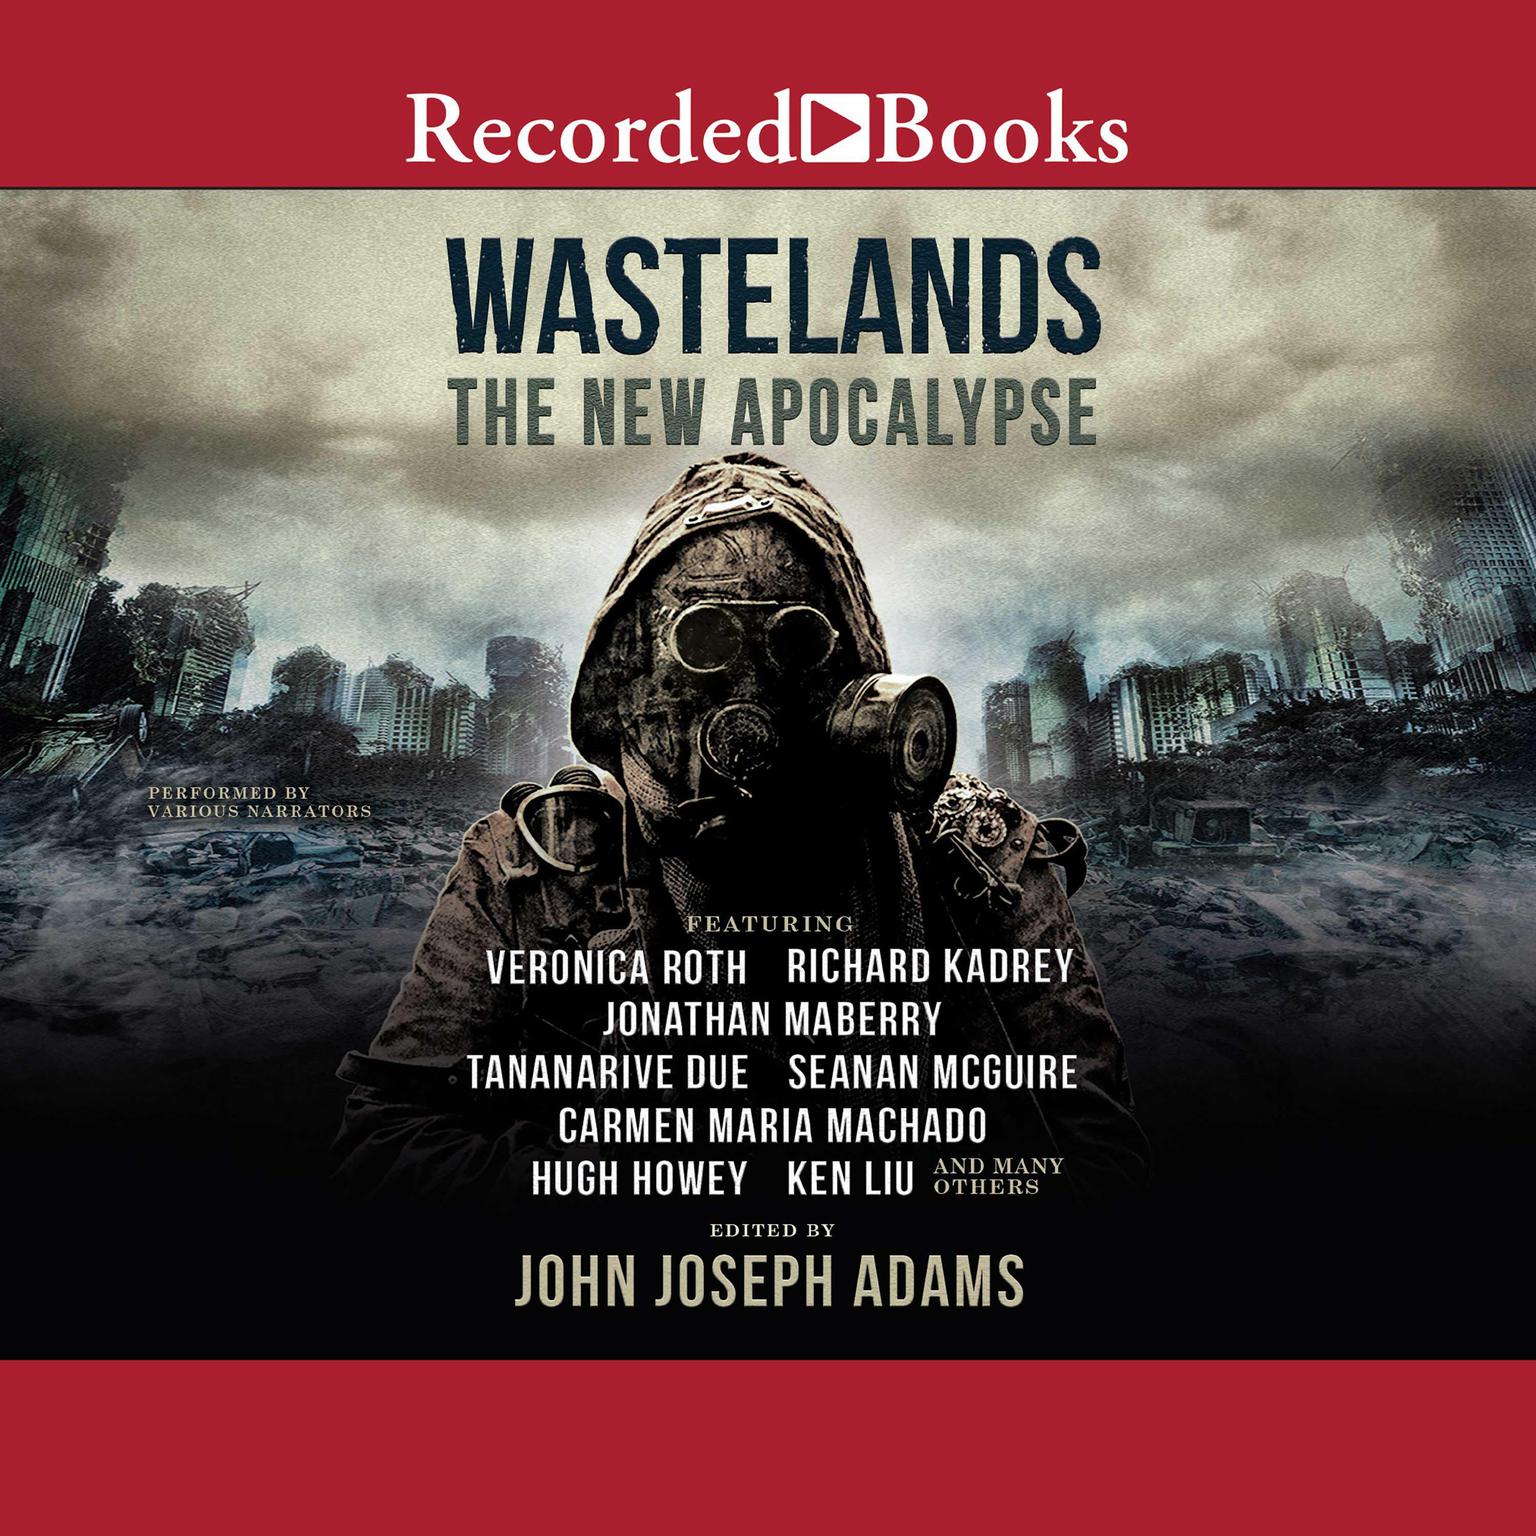 Wastelands: The New Apocalypse Audiobook, by John Joseph Adams